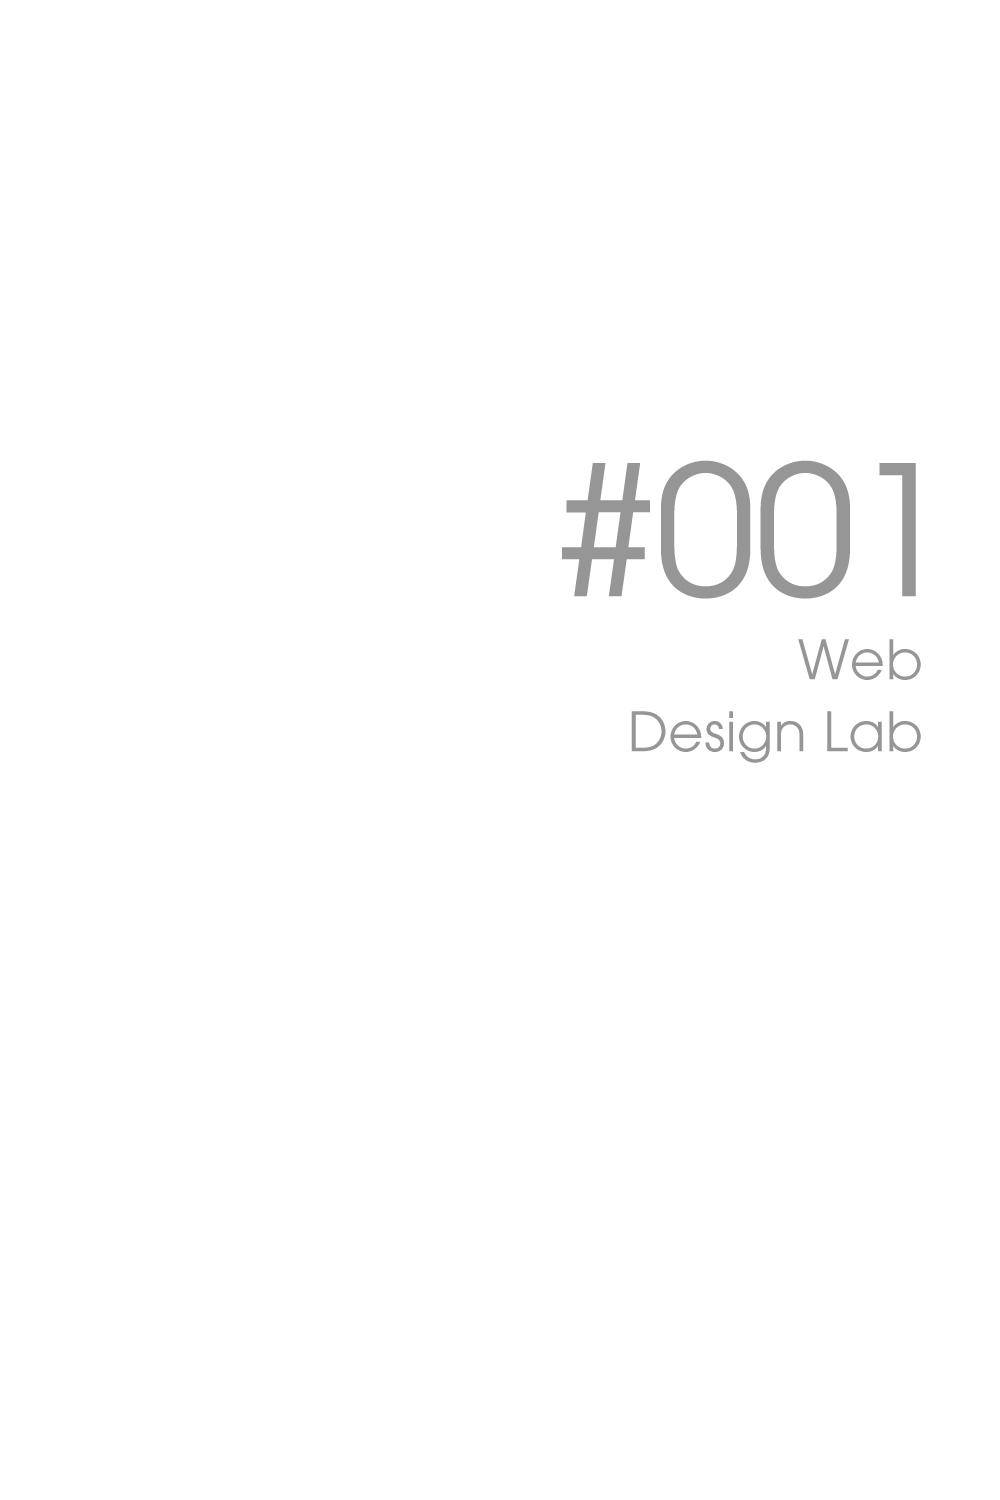 Web_DesignLab